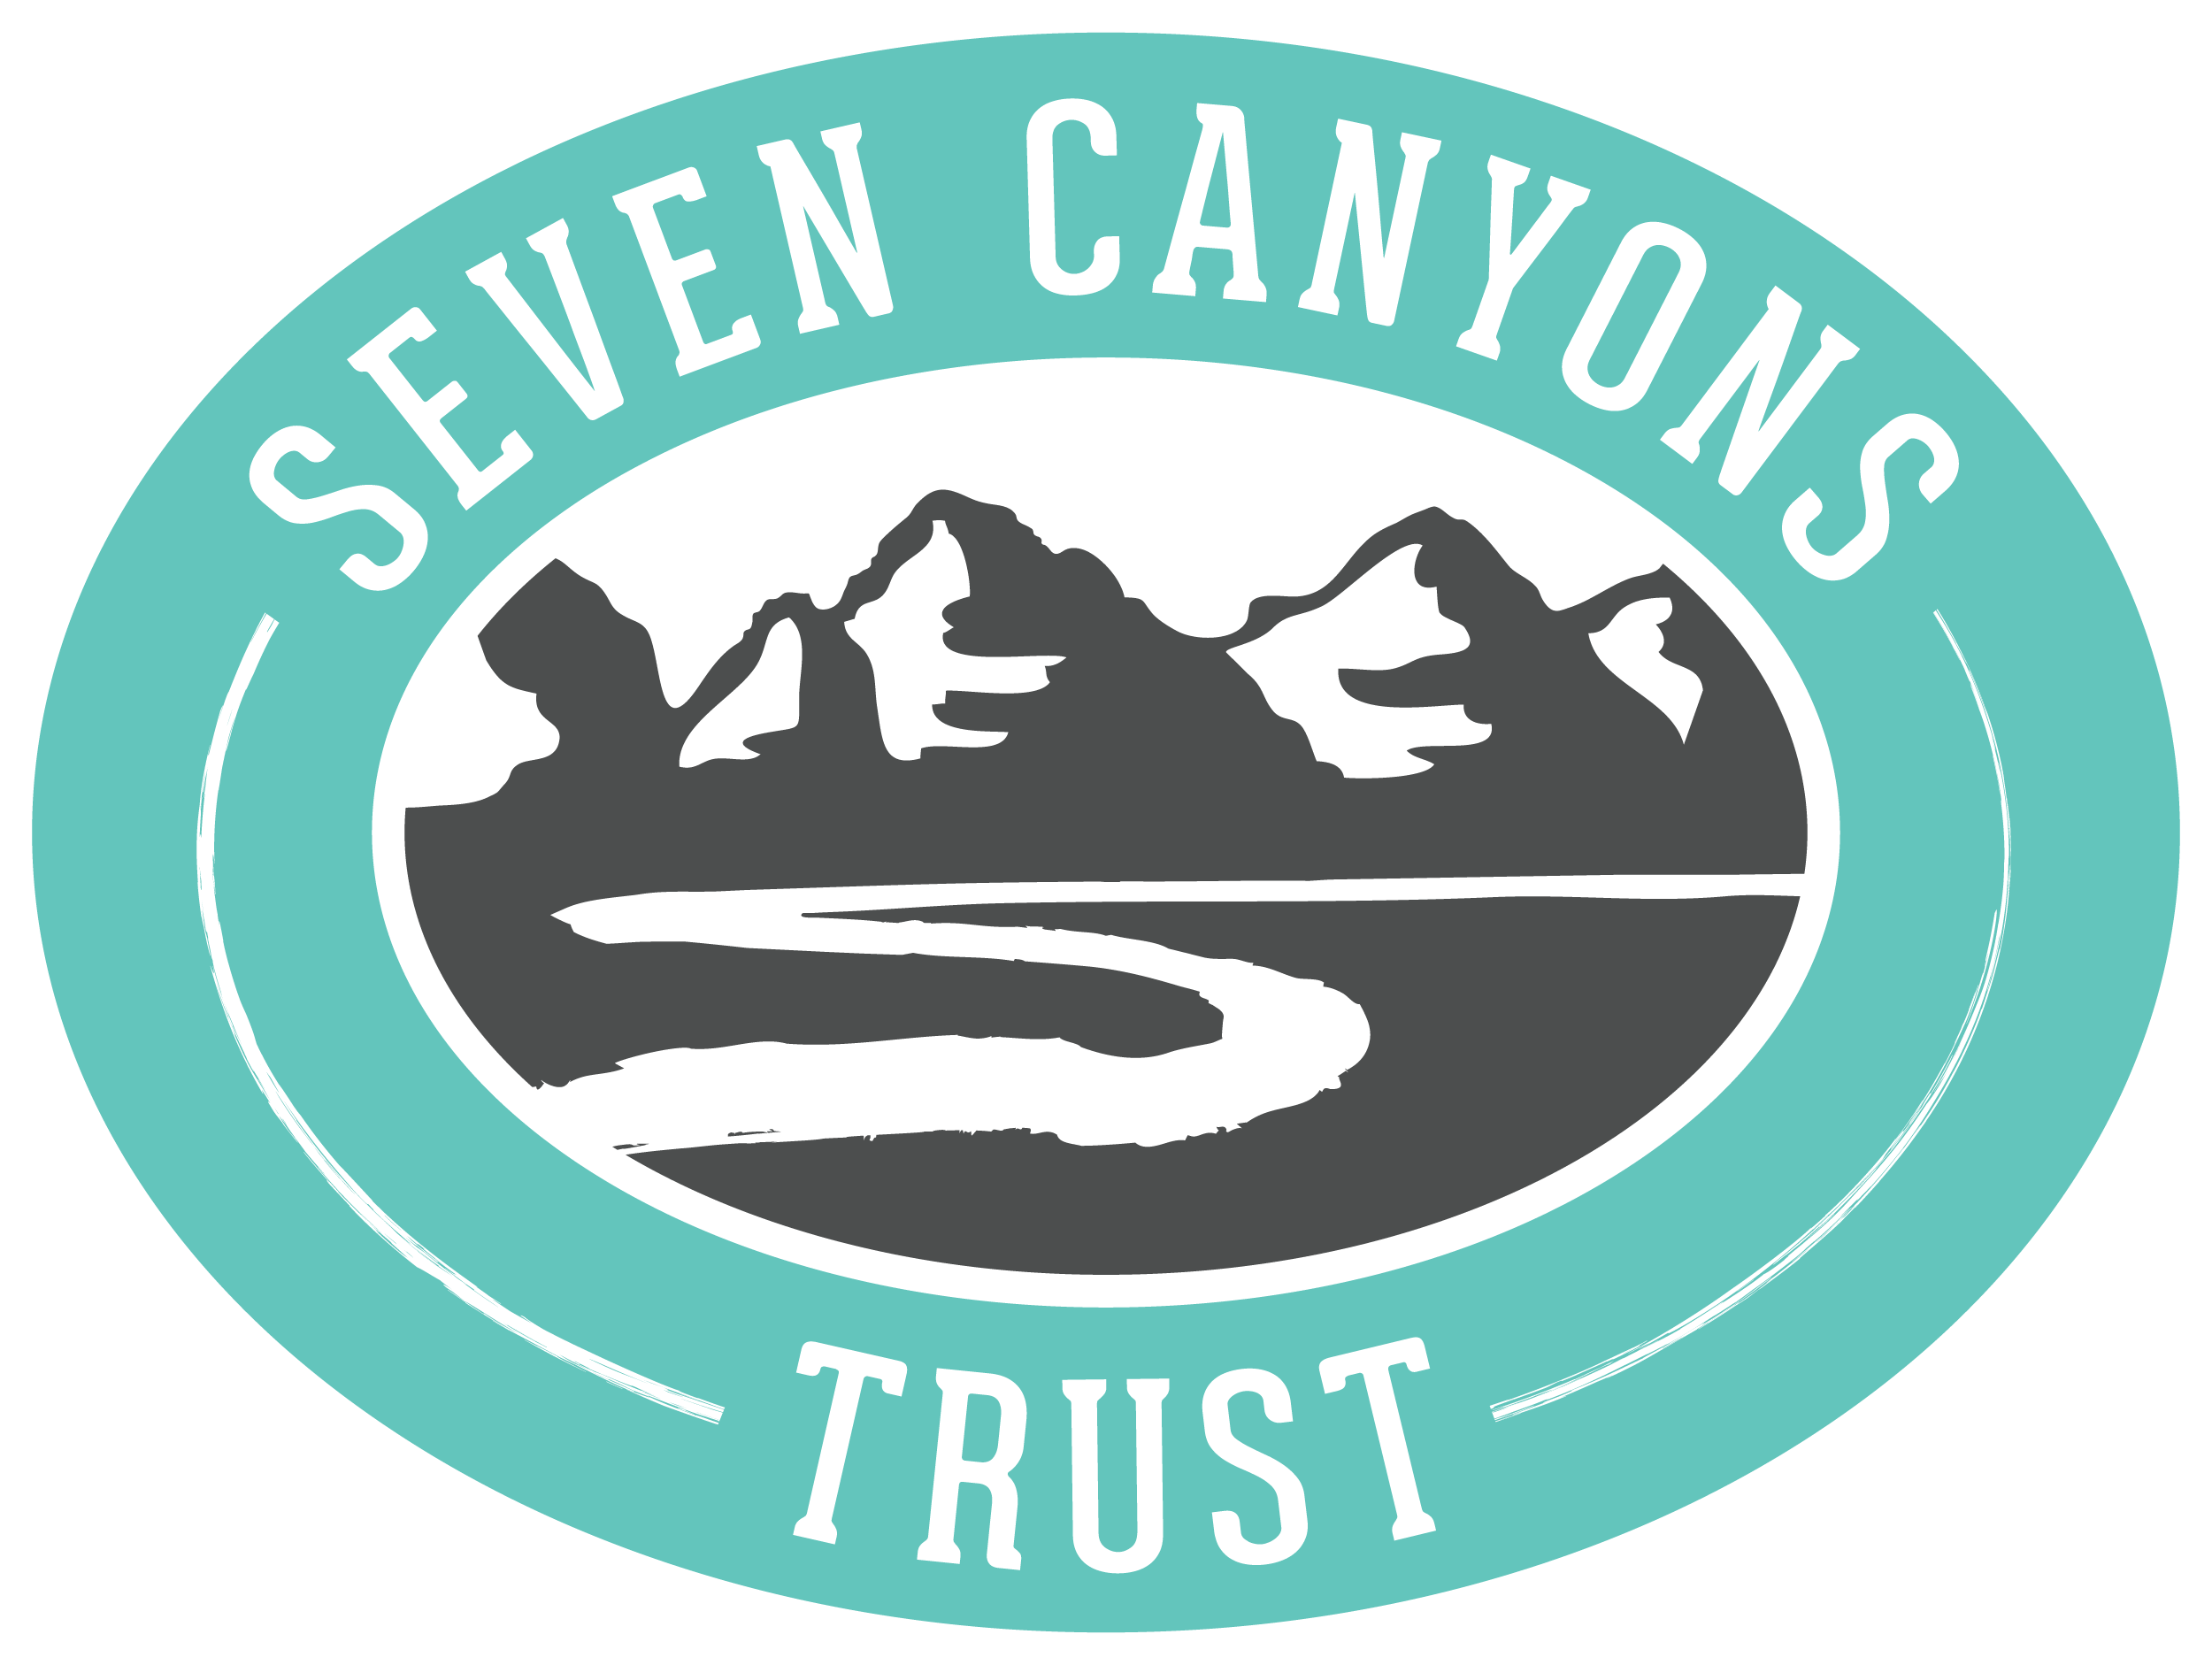 Seven Canyons Trust logo